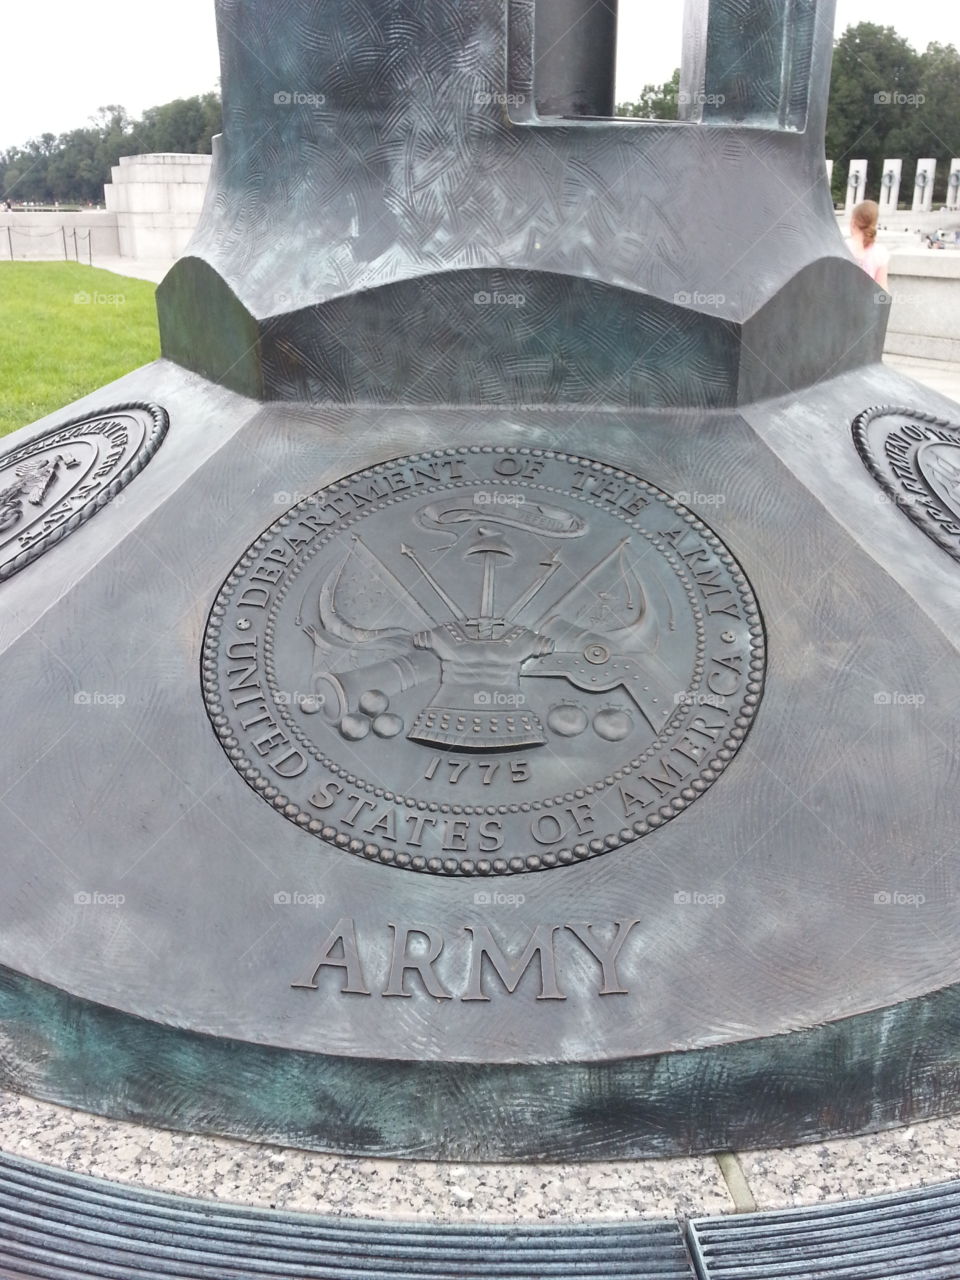 Army monumental